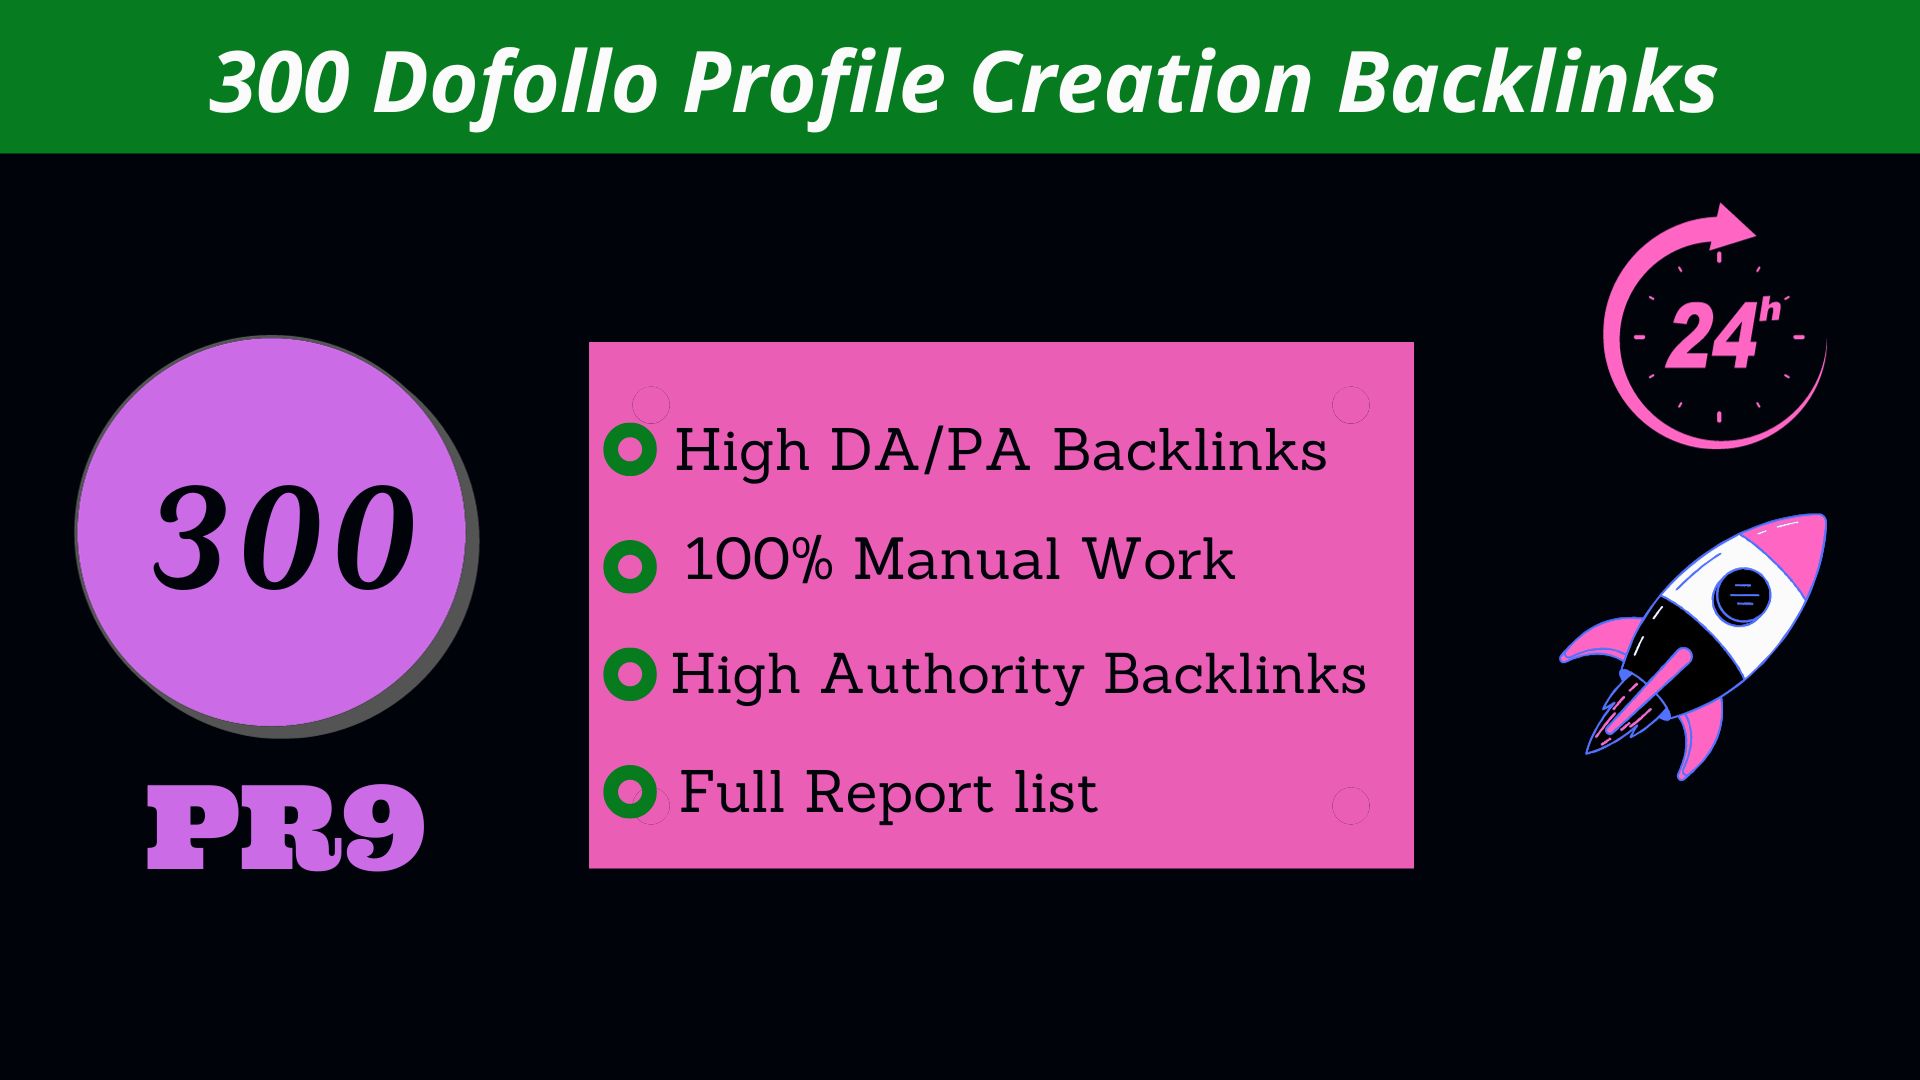 I will create 300 high Authority Profile Creation Backlinks